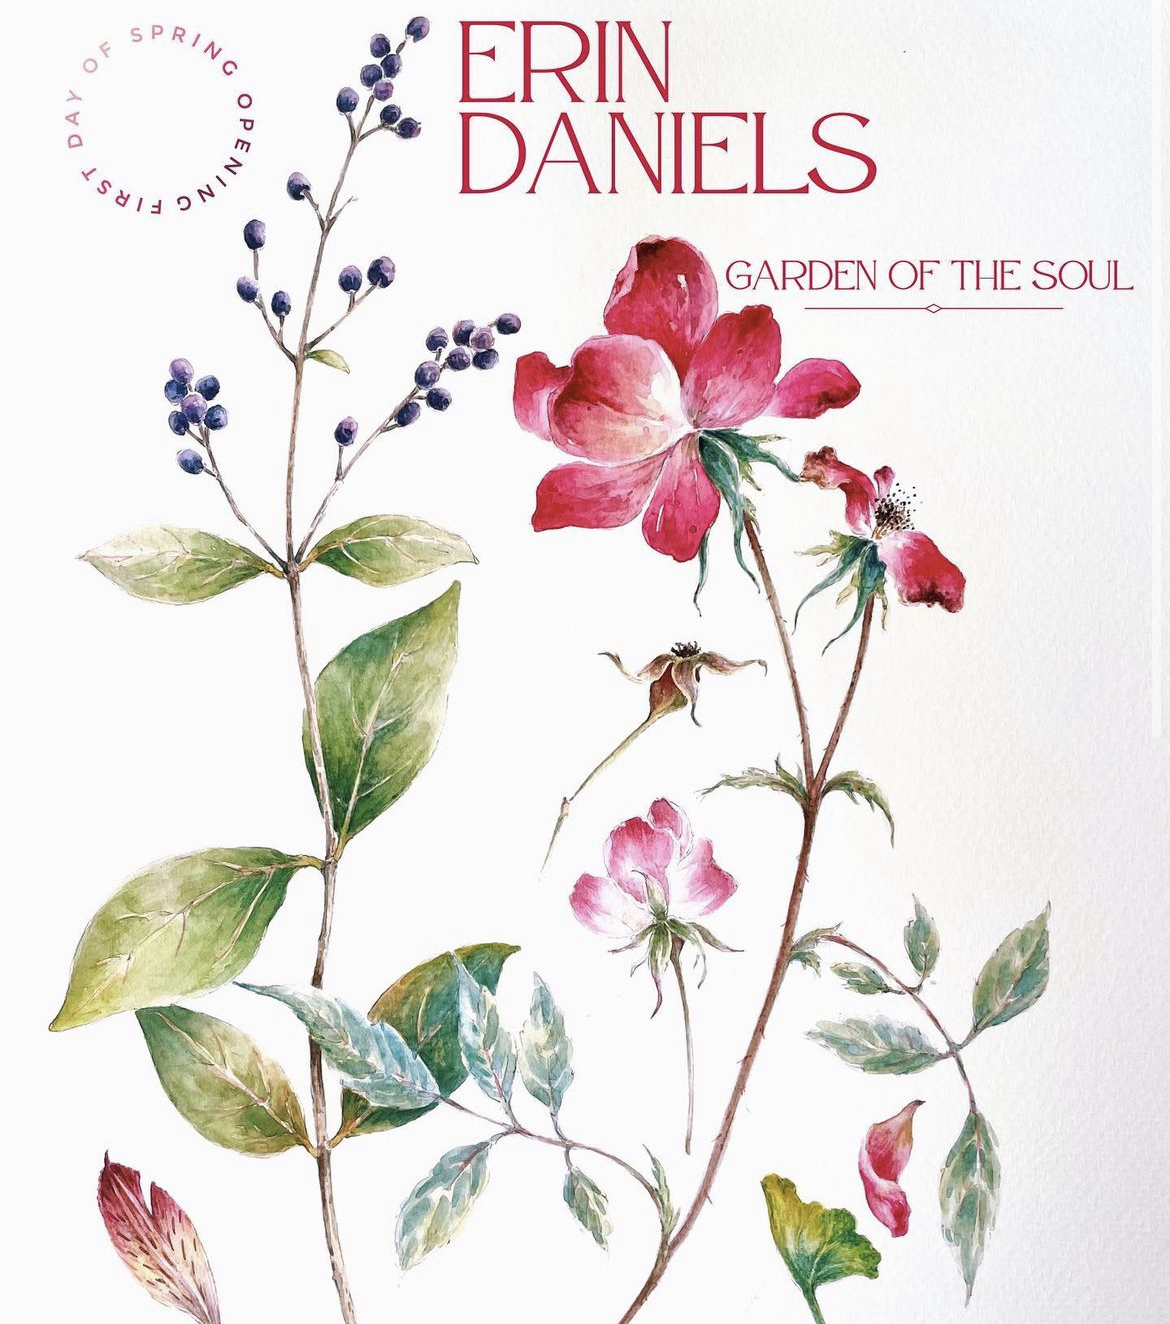 Erin Daniels "Garden of the Soul" Poster